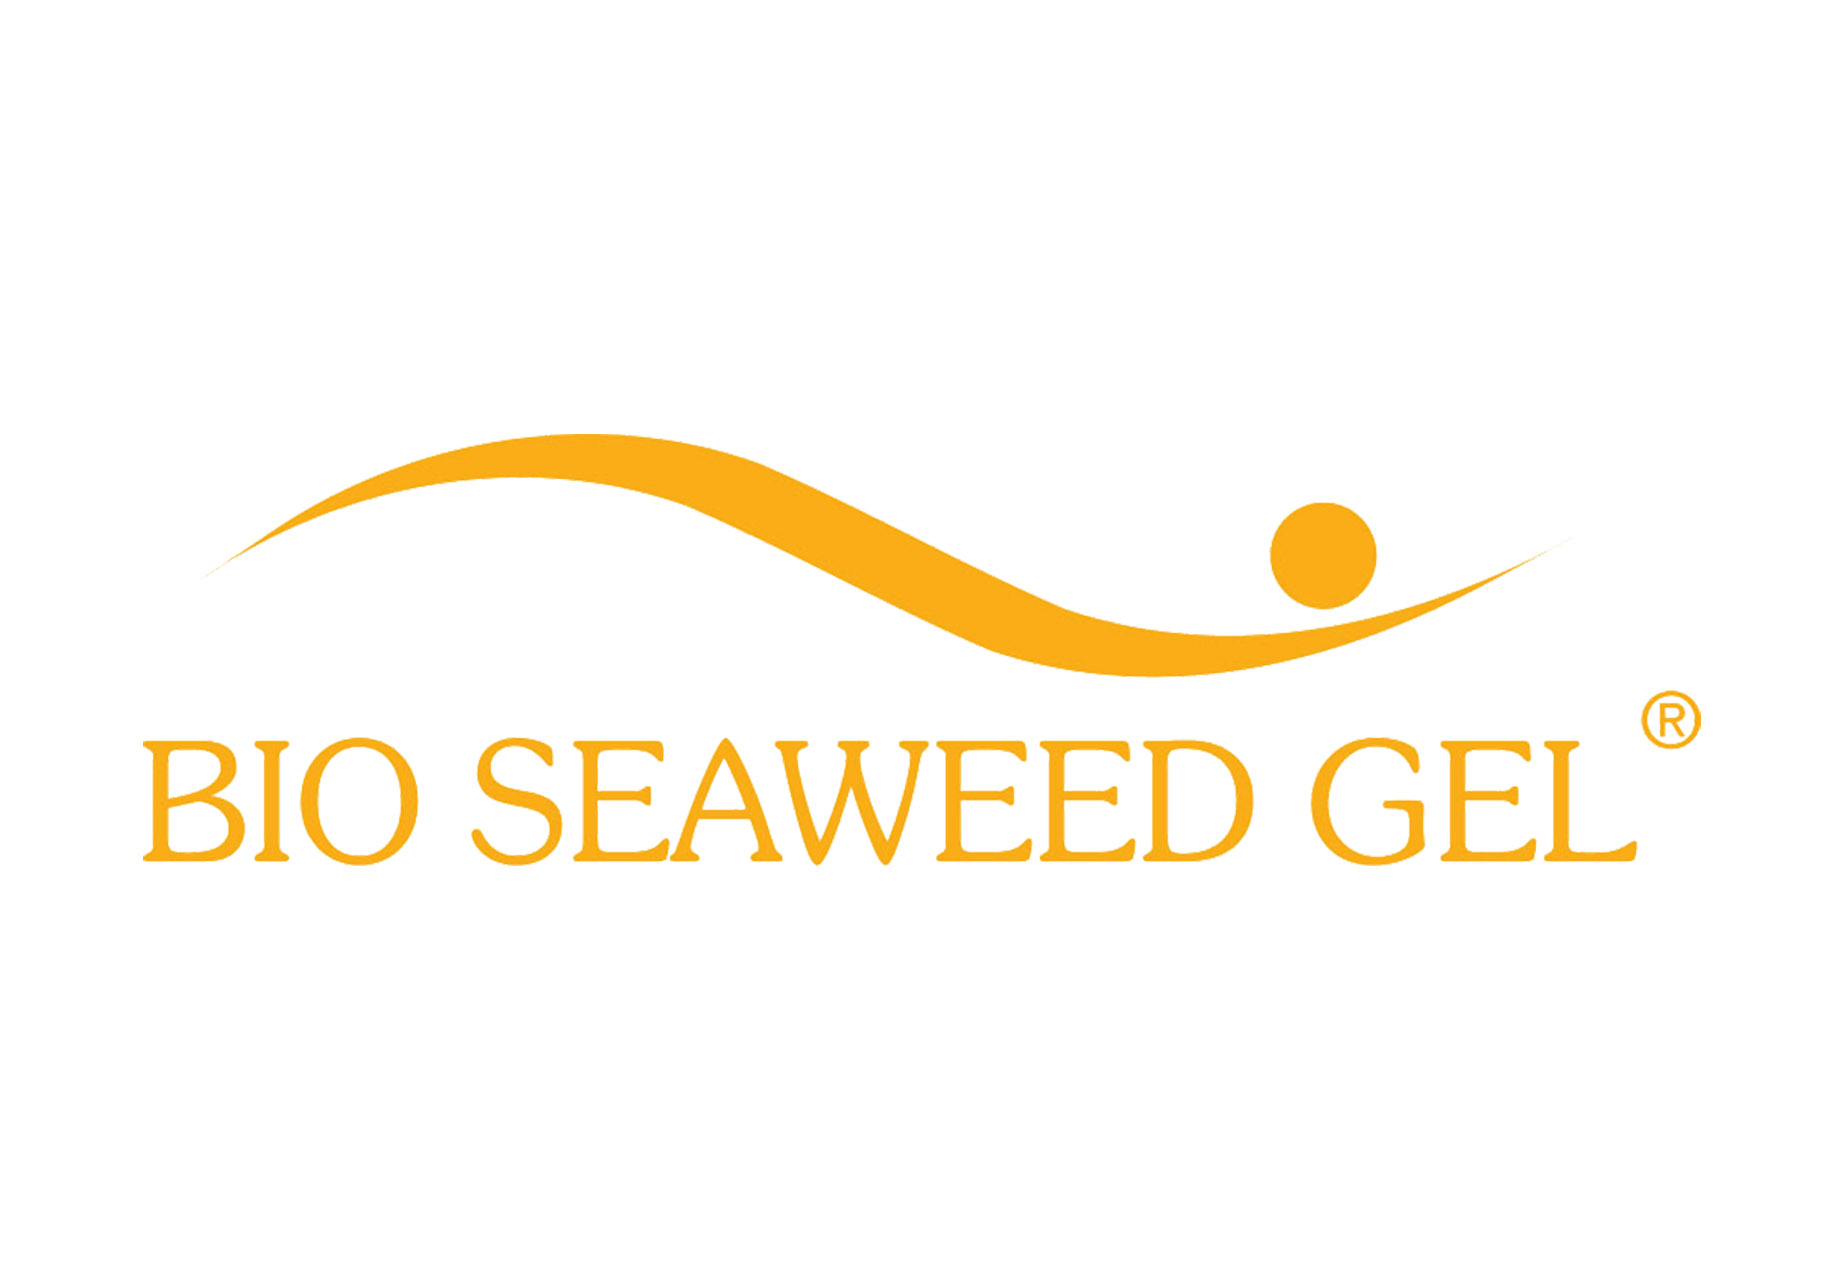 Bio Seaweed Gel - Logo